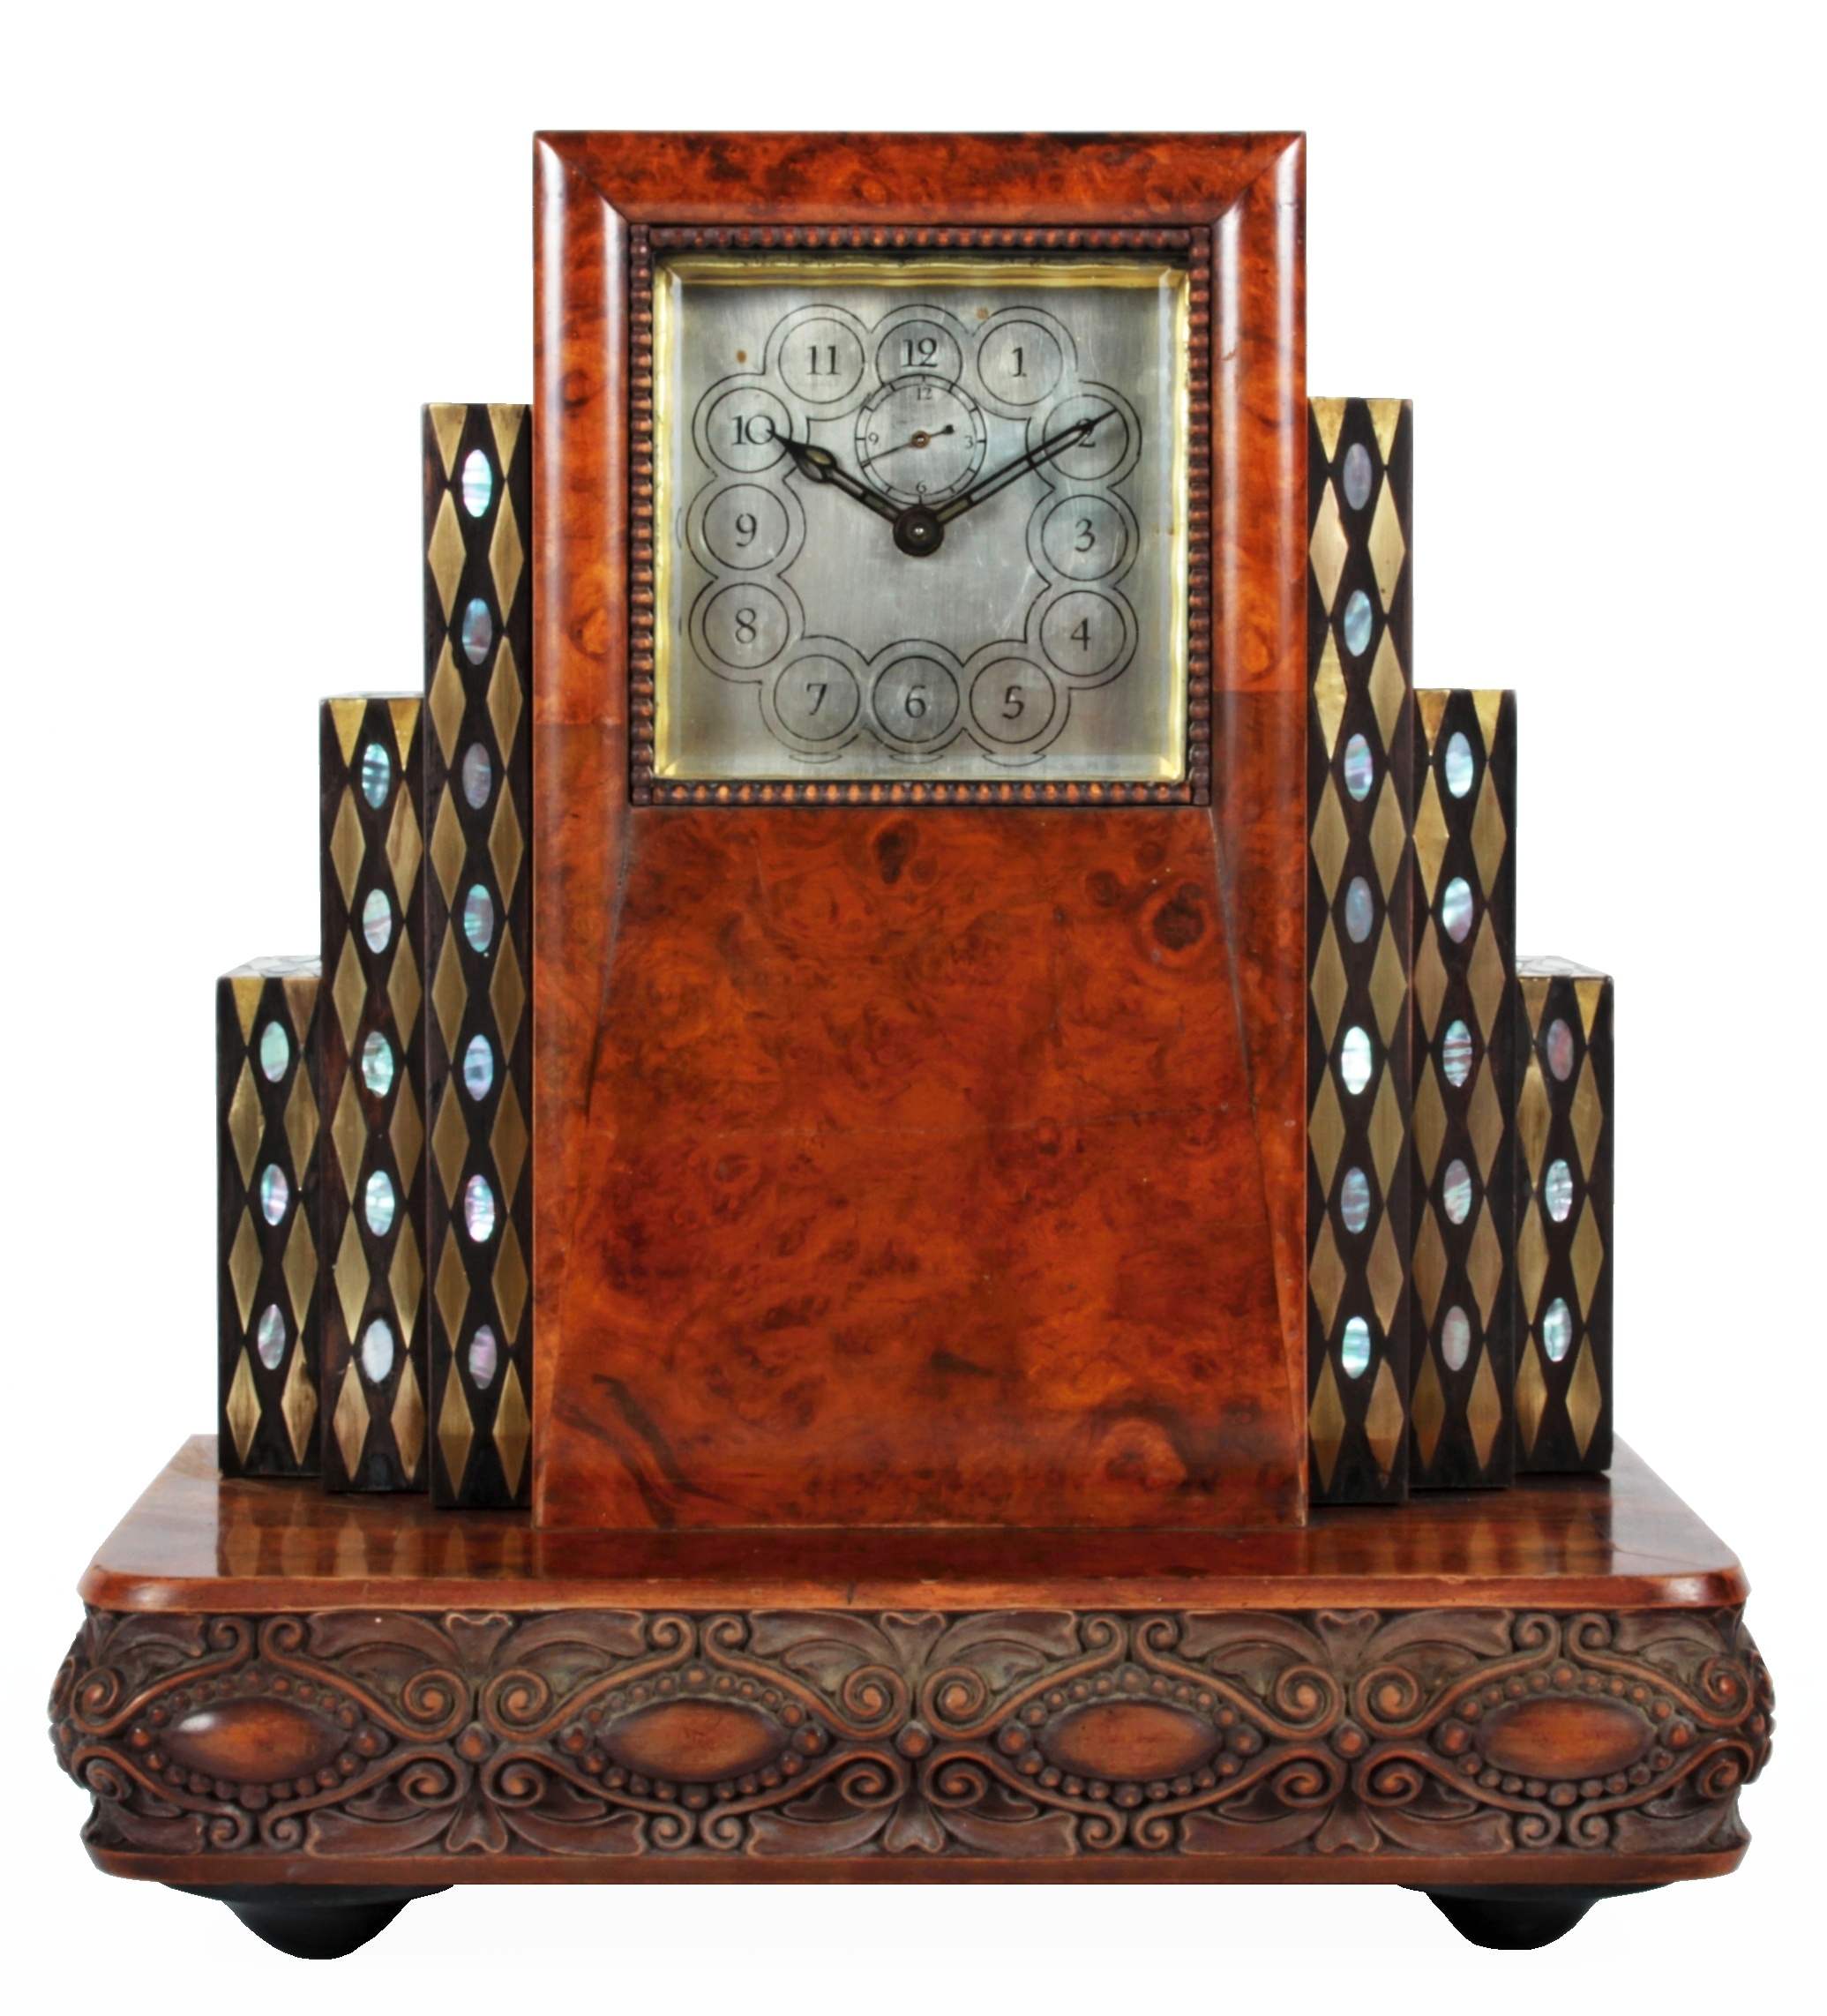 Table clock designed by architect Otto Prutscher (1880 - 1949)